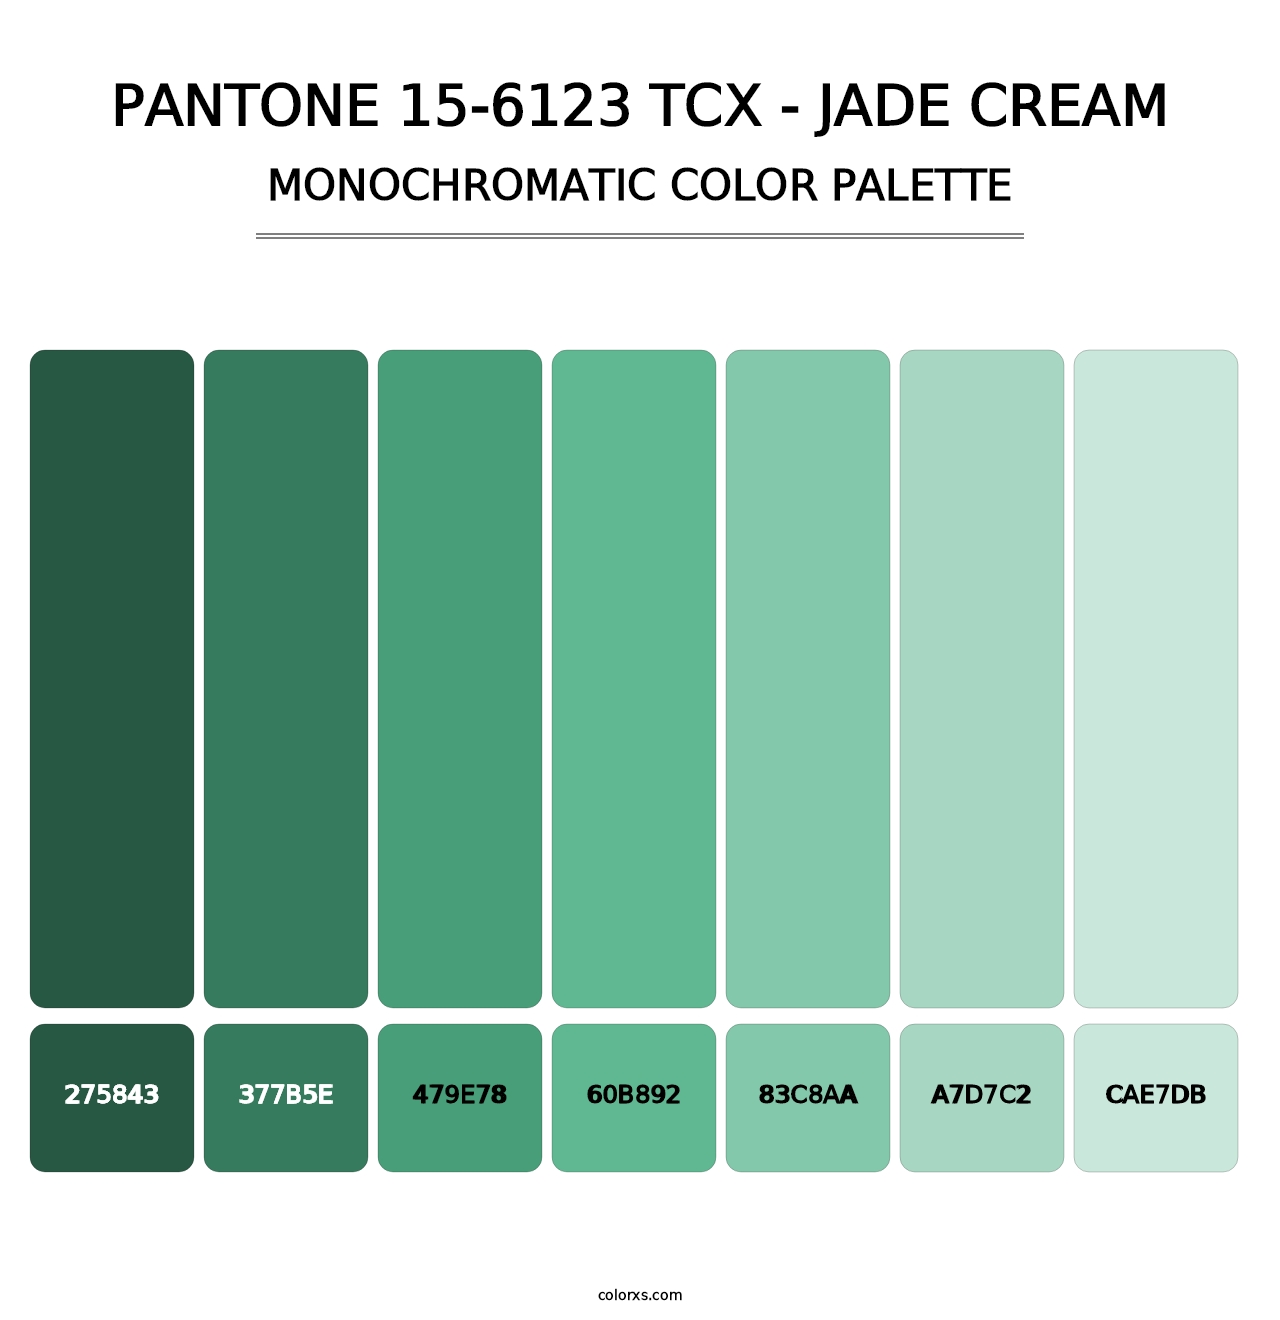 PANTONE 15-6123 TCX - Jade Cream - Monochromatic Color Palette